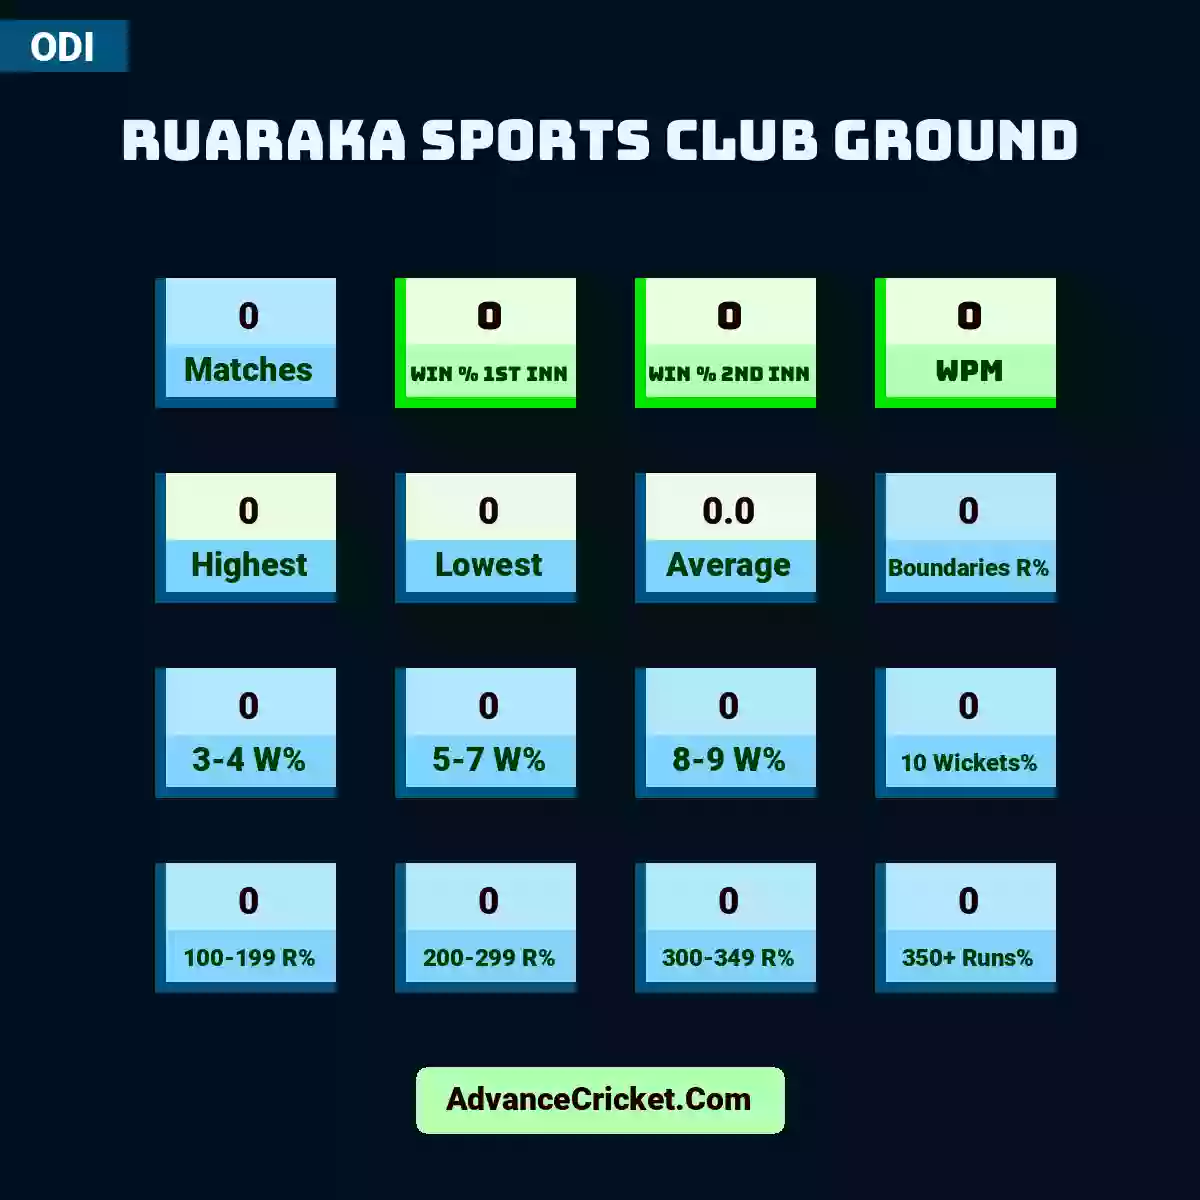 Image showing Ruaraka Sports Club Ground with Matches: 0, Win % 1st Inn: 0, Win % 2nd Inn: 0, WPM: 0, Highest: 0, Lowest: 0, Average: 0.0, Boundaries R%: 0, 3-4 W%: 0, 5-7 W%: 0, 8-9 W%: 0, 10 Wickets%: 0, 100-199 R%: 0, 200-299 R%: 0, 300-349 R%: 0, 350+ Runs%: 0.